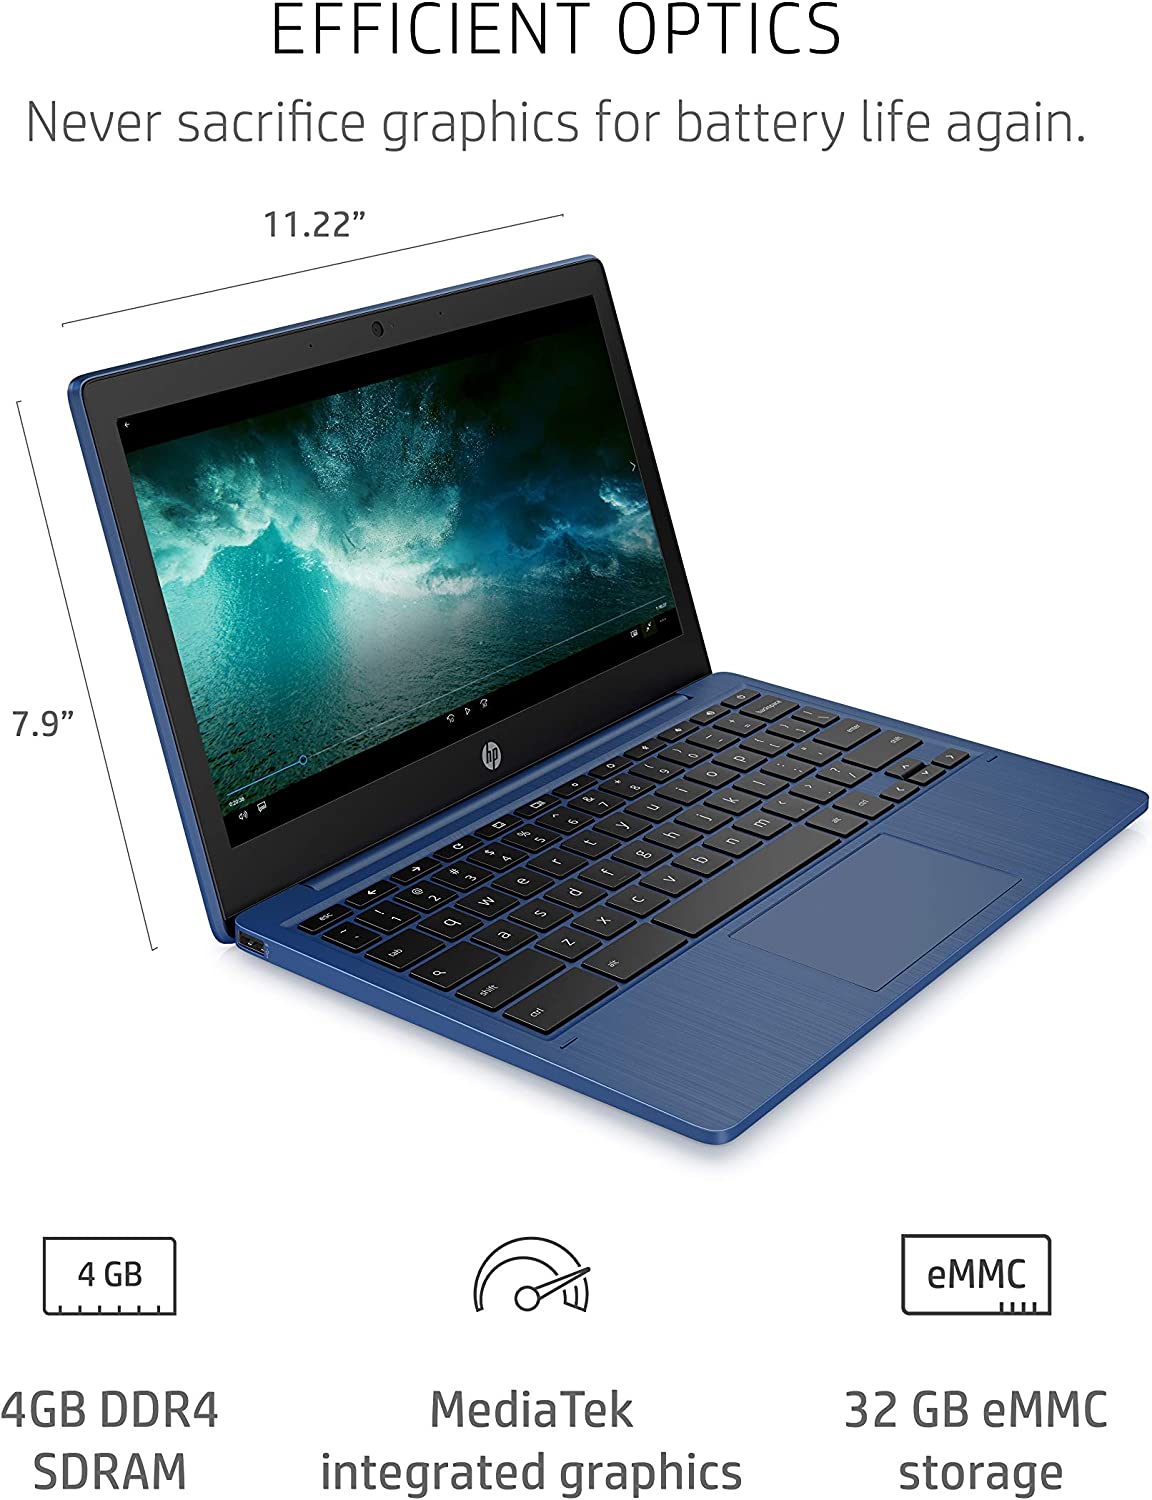 HP Chromebook 11-inch Laptop - MediaTek - MT8183 - 4 GB RAM - 32 GB eMMC Storage - 11.6-inch HD Display - with Chrome OS√É¬¢√¢‚Ç¨≈æ√Ç¬¢ - (11a-na0030nr, 2020 model, Indigo Blue)